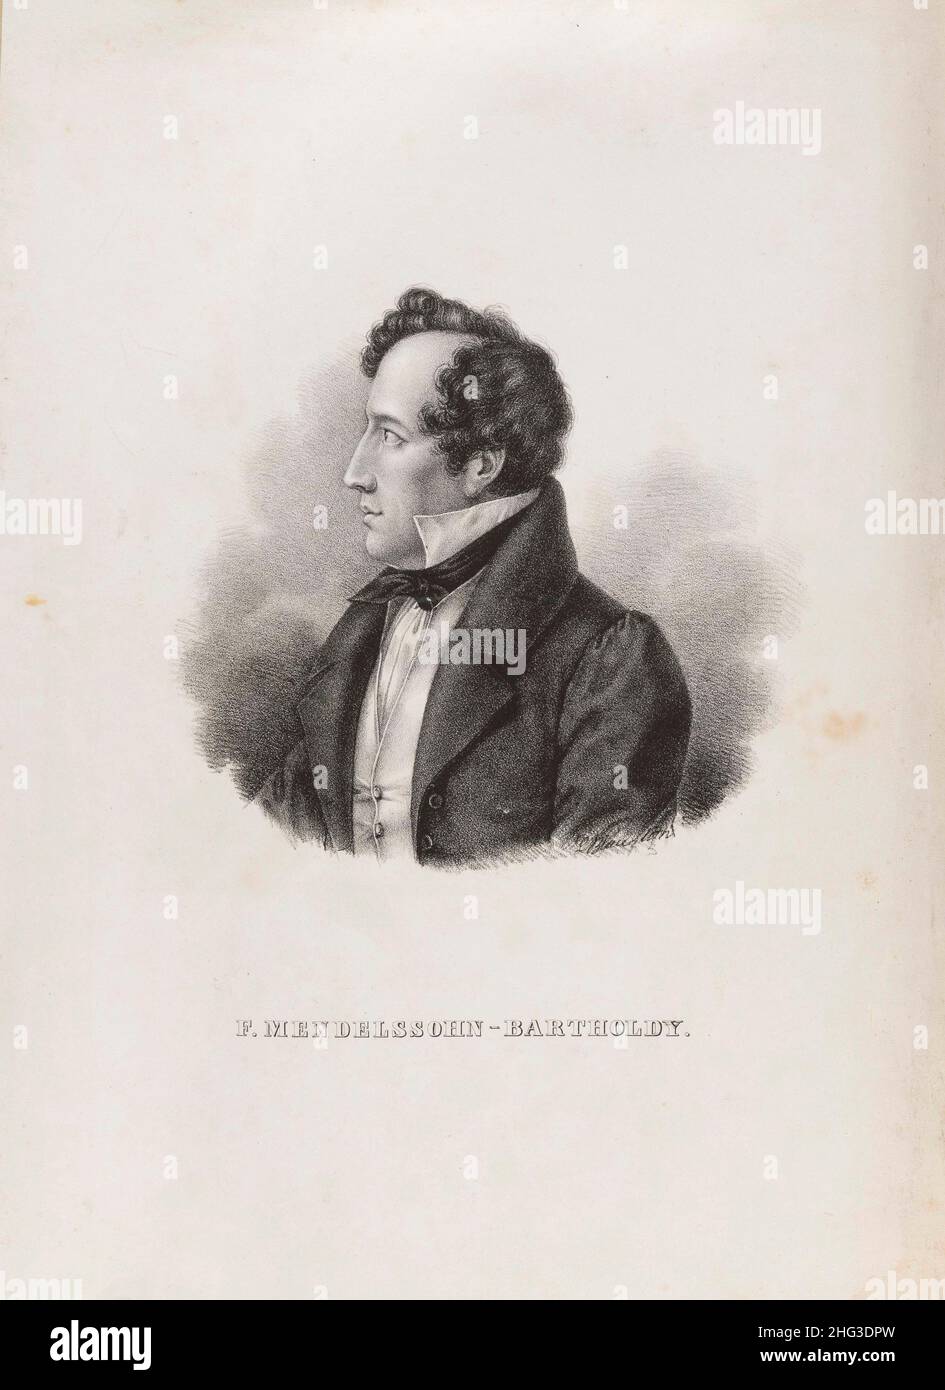 Portrait of Felix Mendelssohn-Bartholdy. 1846-1847, by Ludwig Blau (1808/1810-1899) – graphic artist. Jakob Ludwig Felix Mendelssohn Bartholdy (1809 – Stock Photo